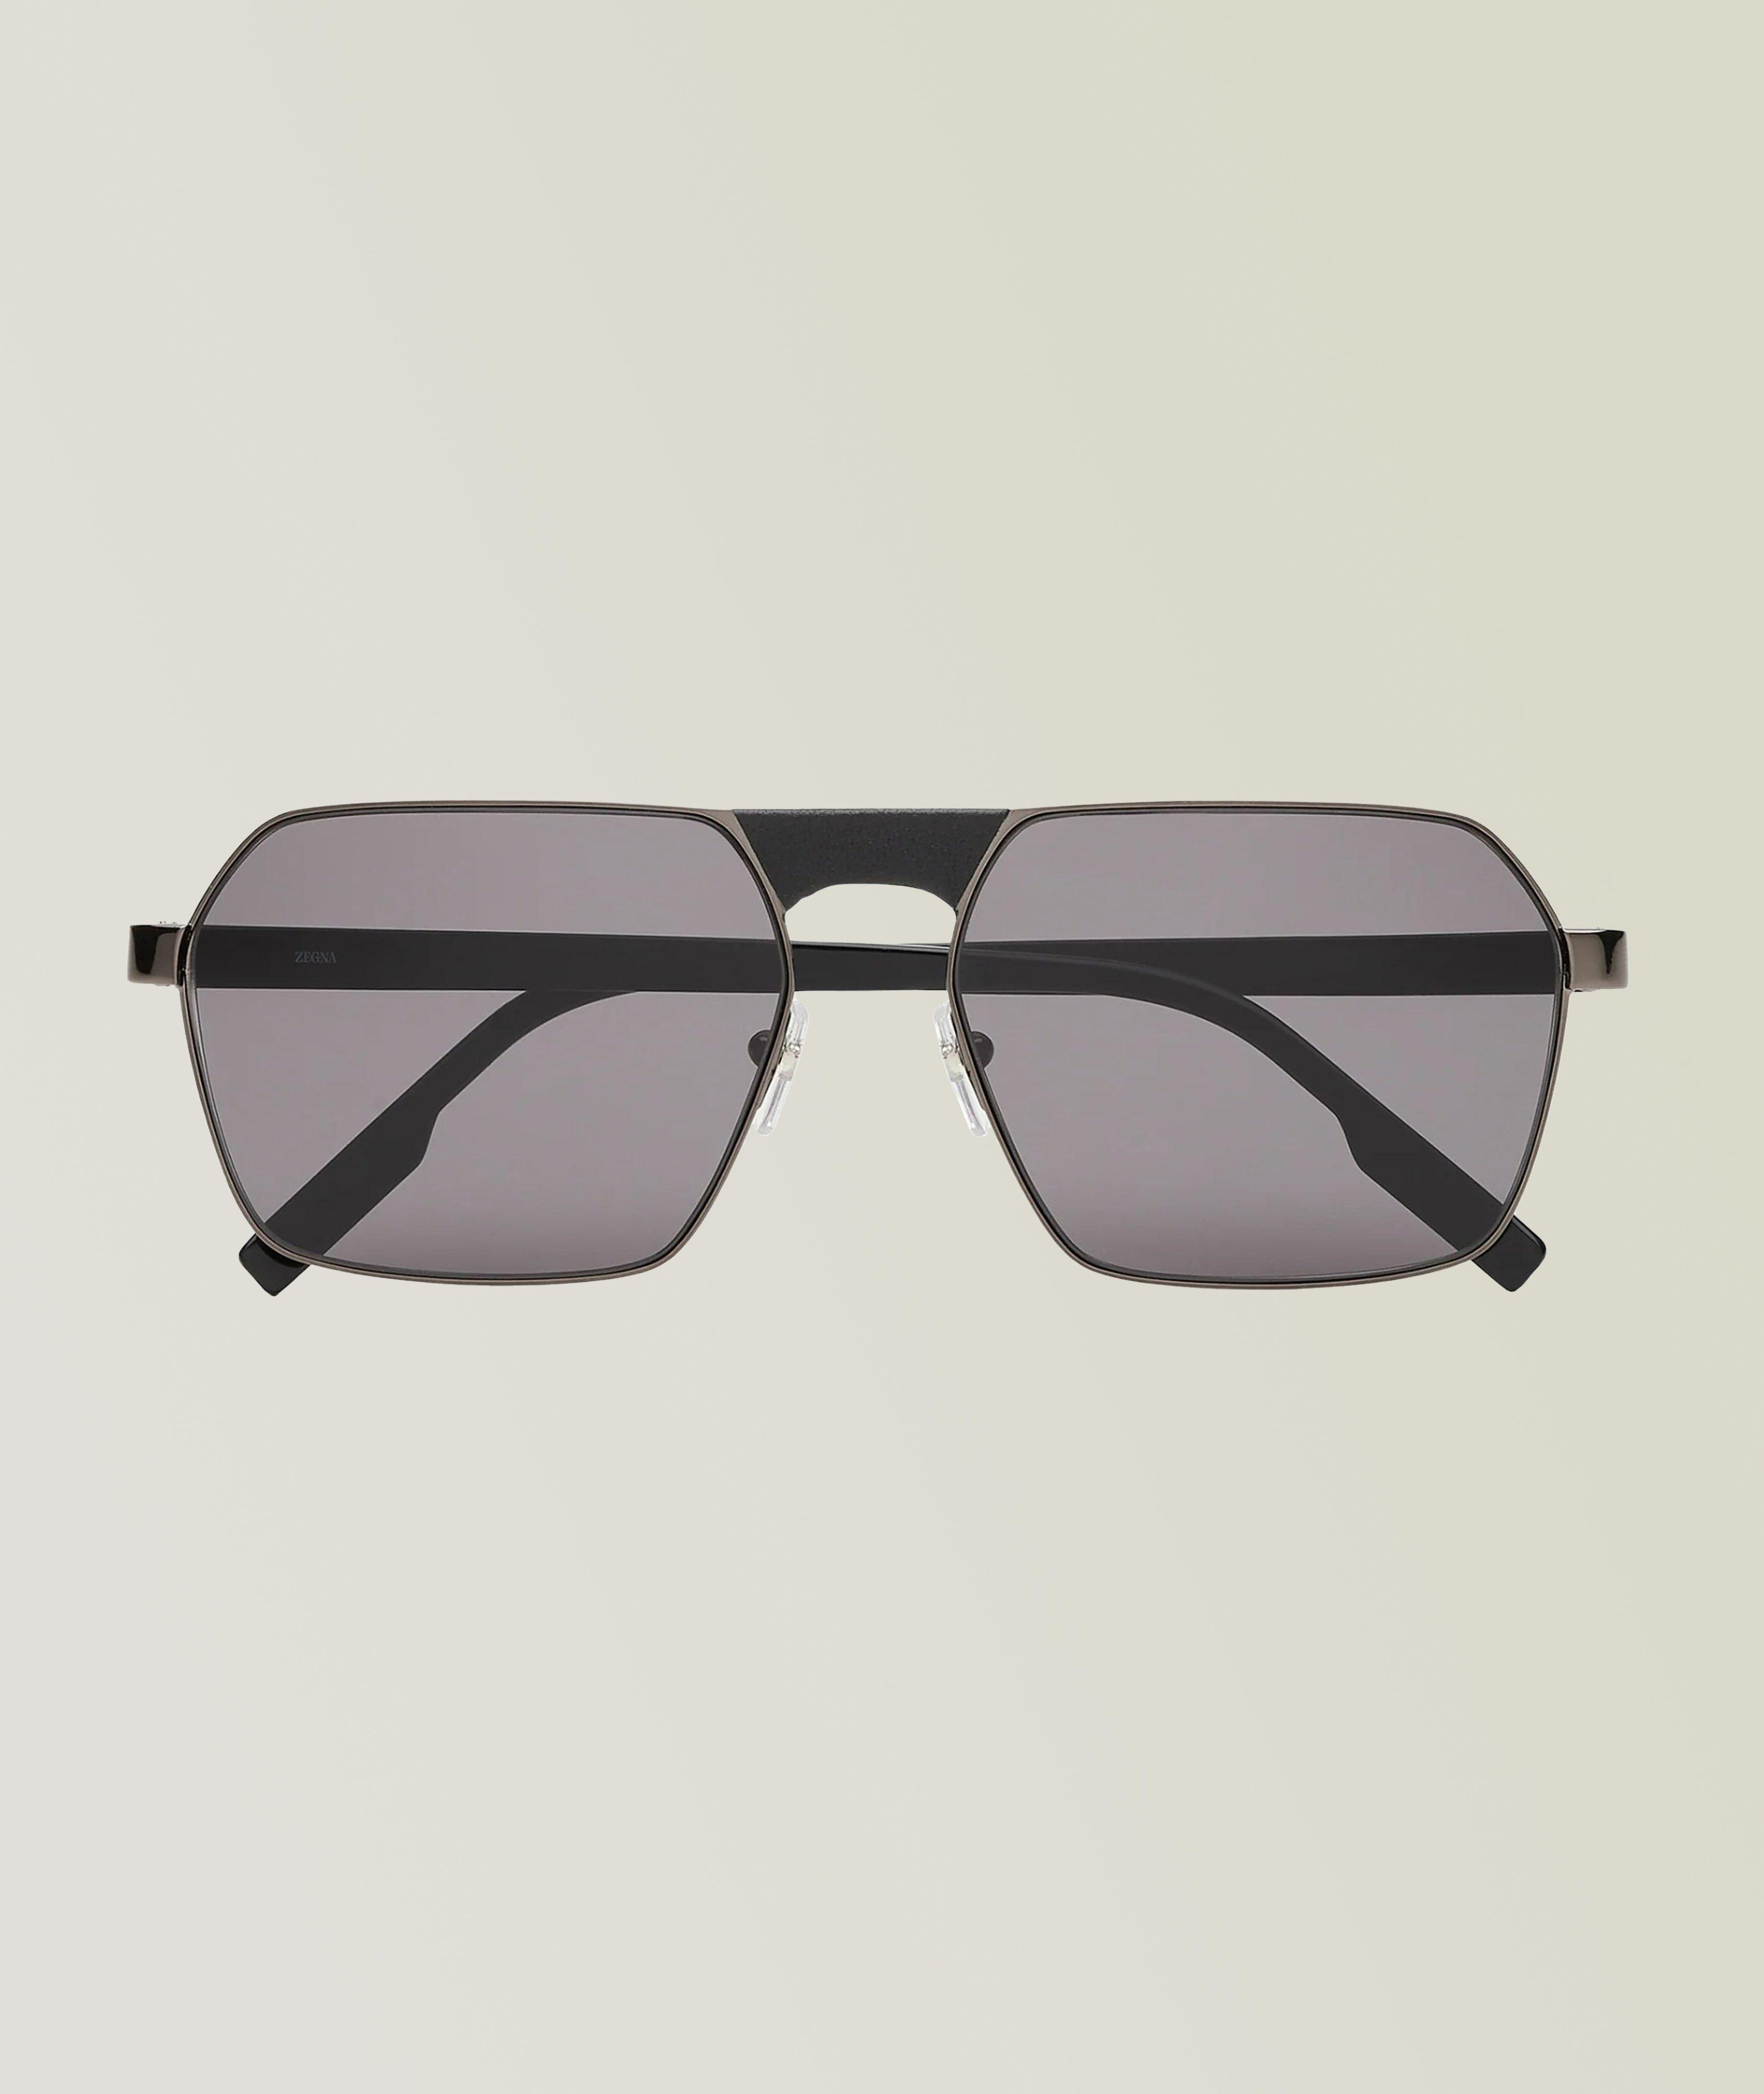 Leggerissimo Caravan-Style Frame Sunglasses image 0